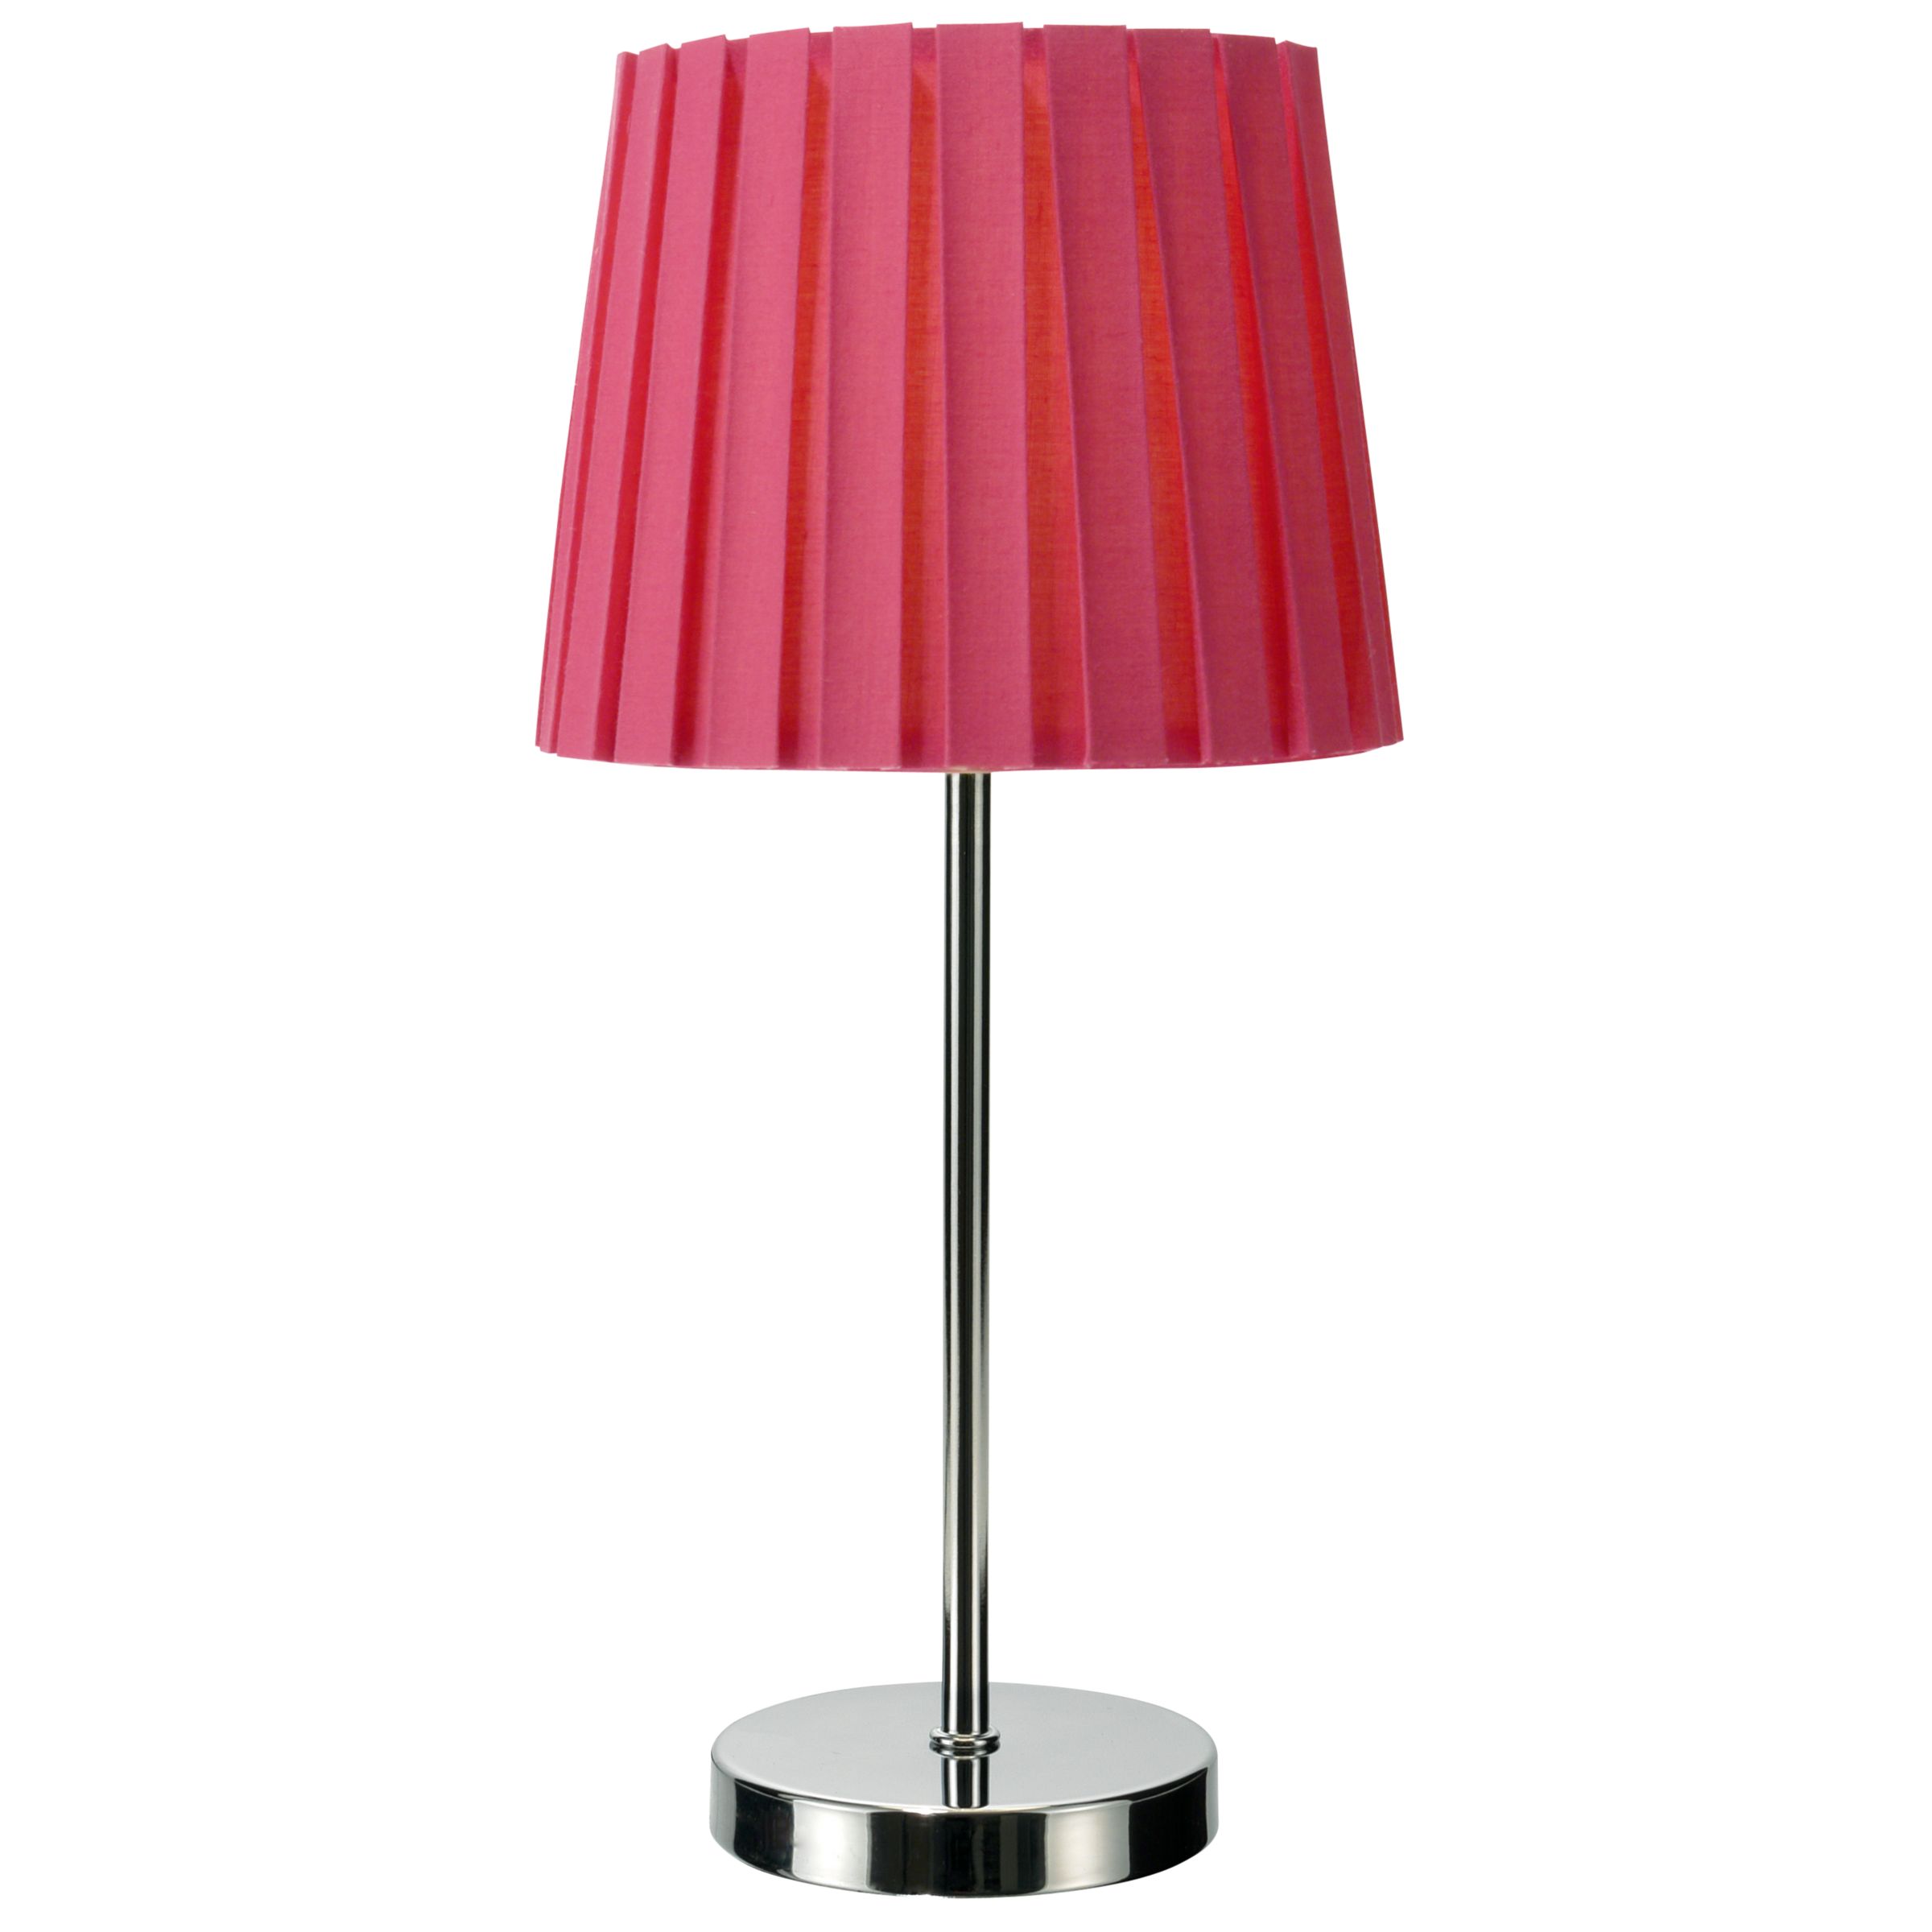 John Lewis Sunita Table Lamp, Pink